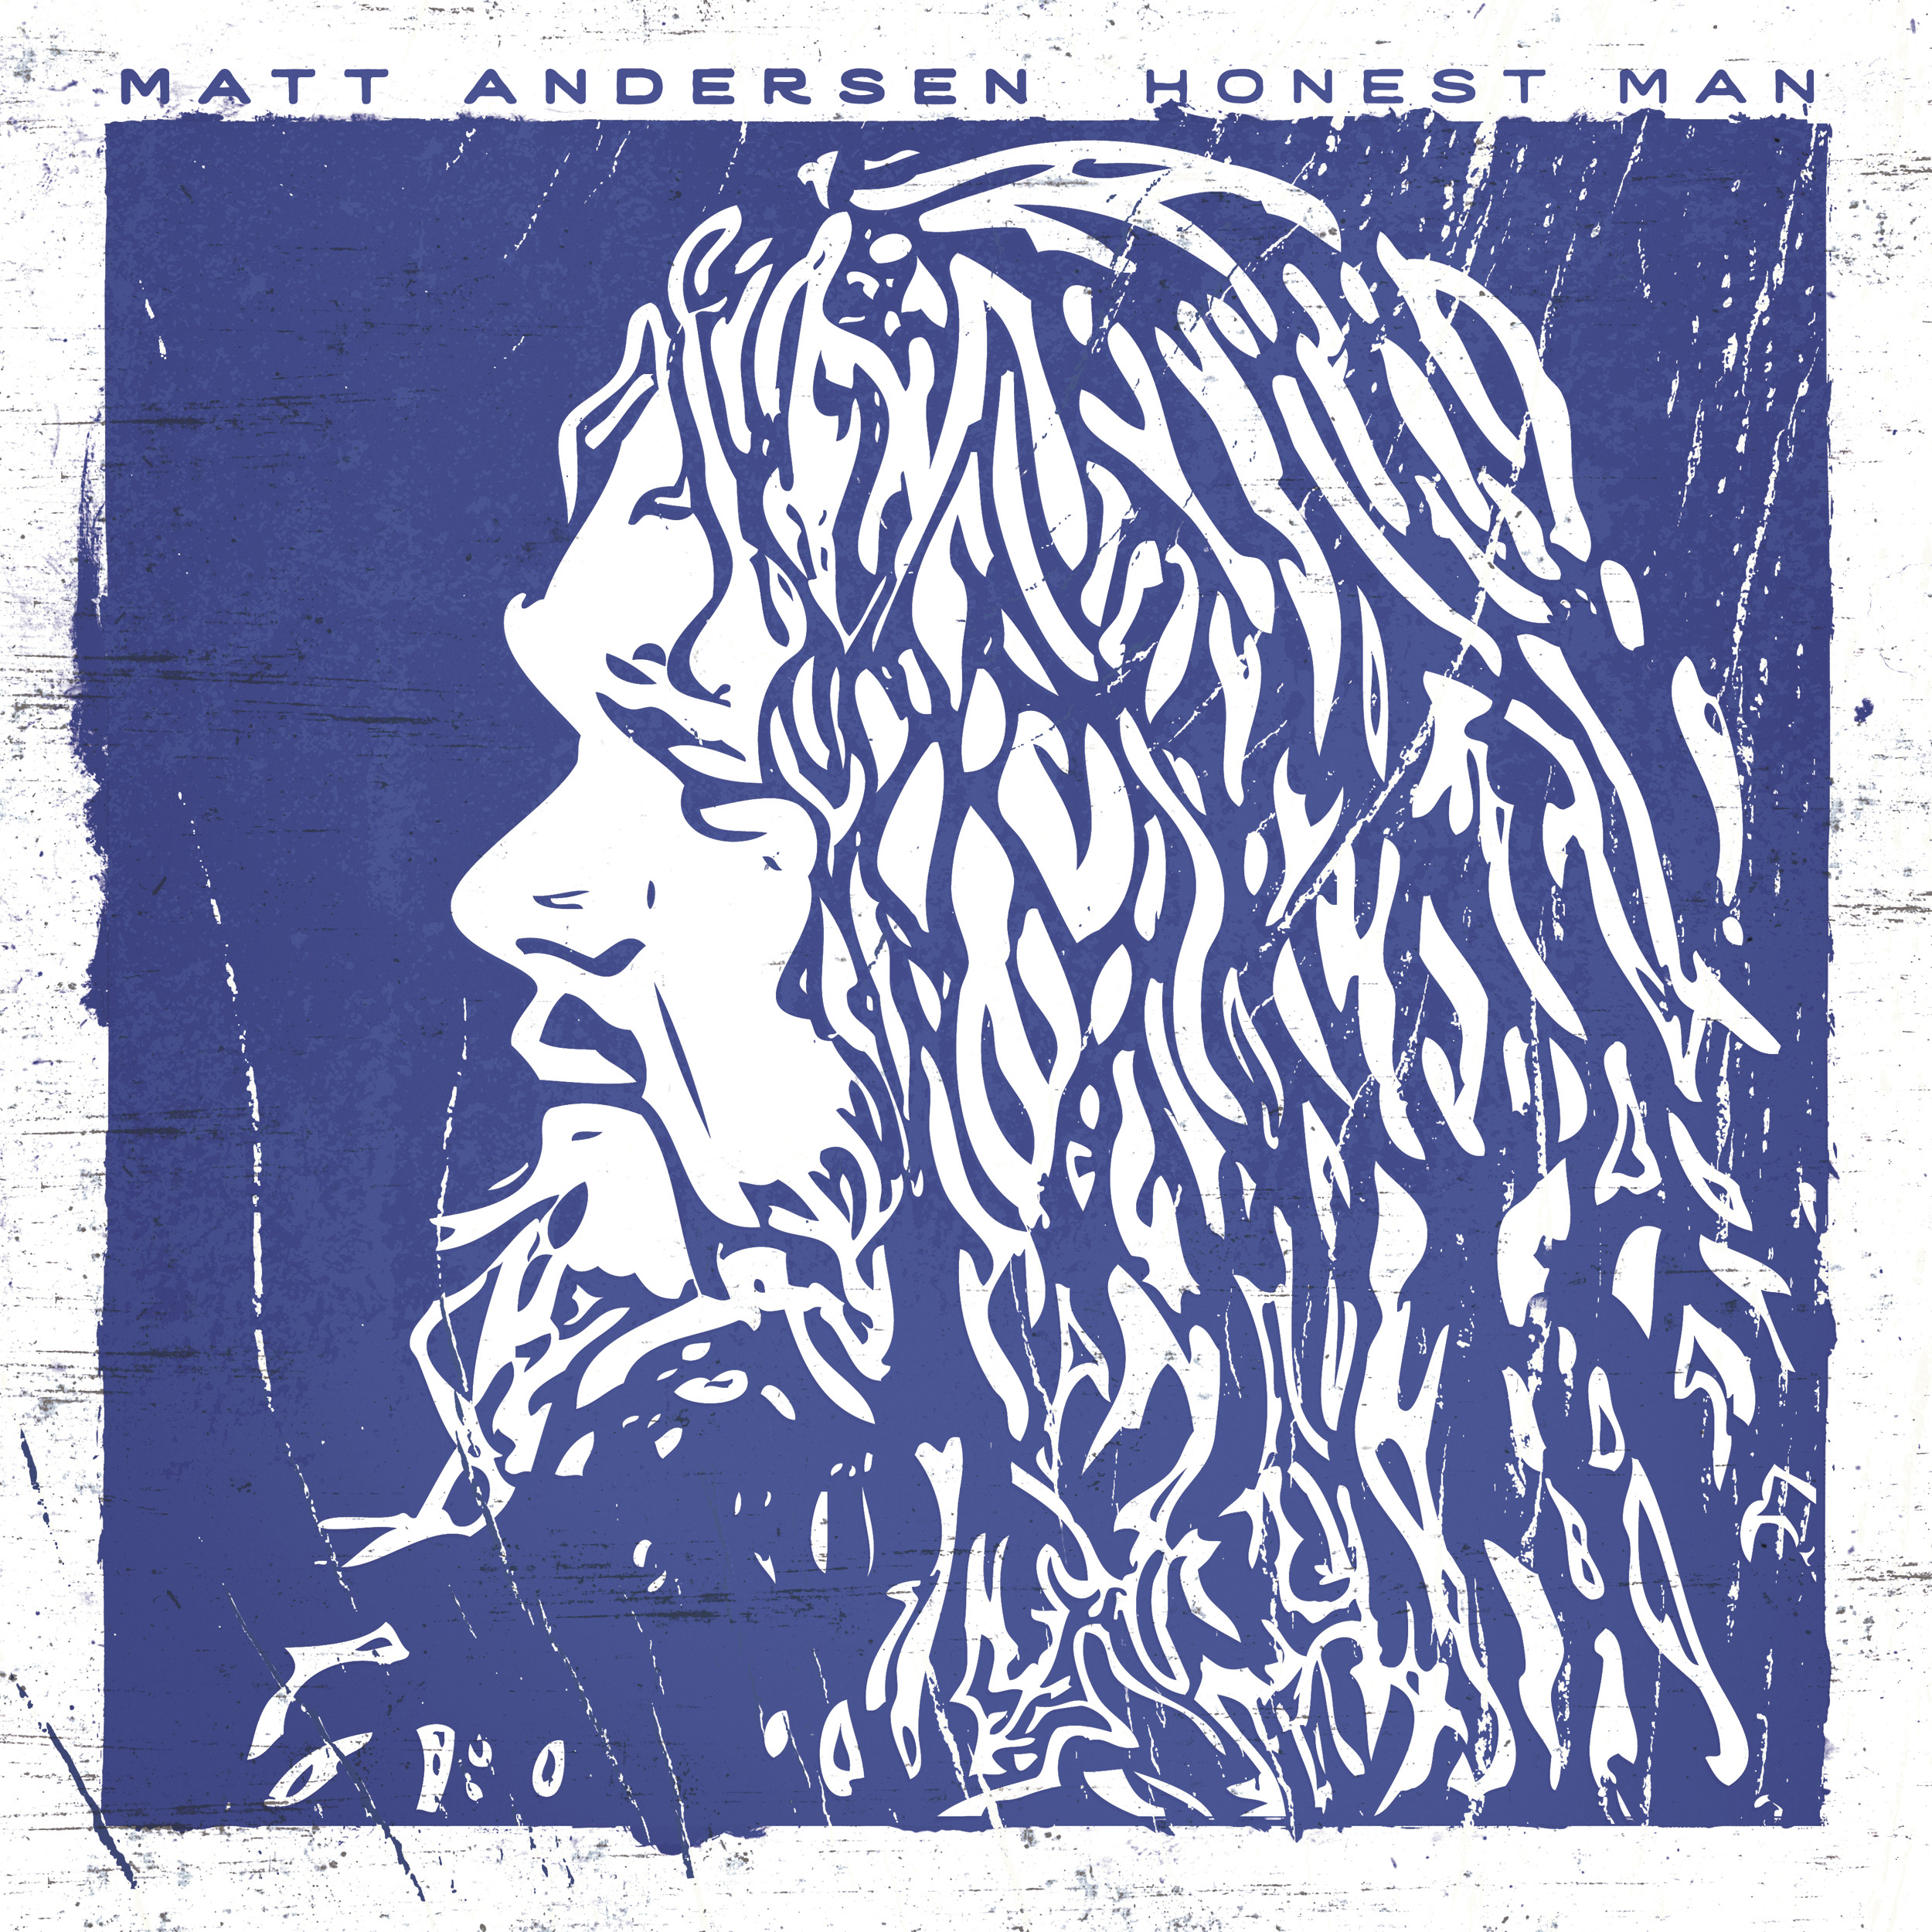 image of album cover for Matt Andersen album Honest Man